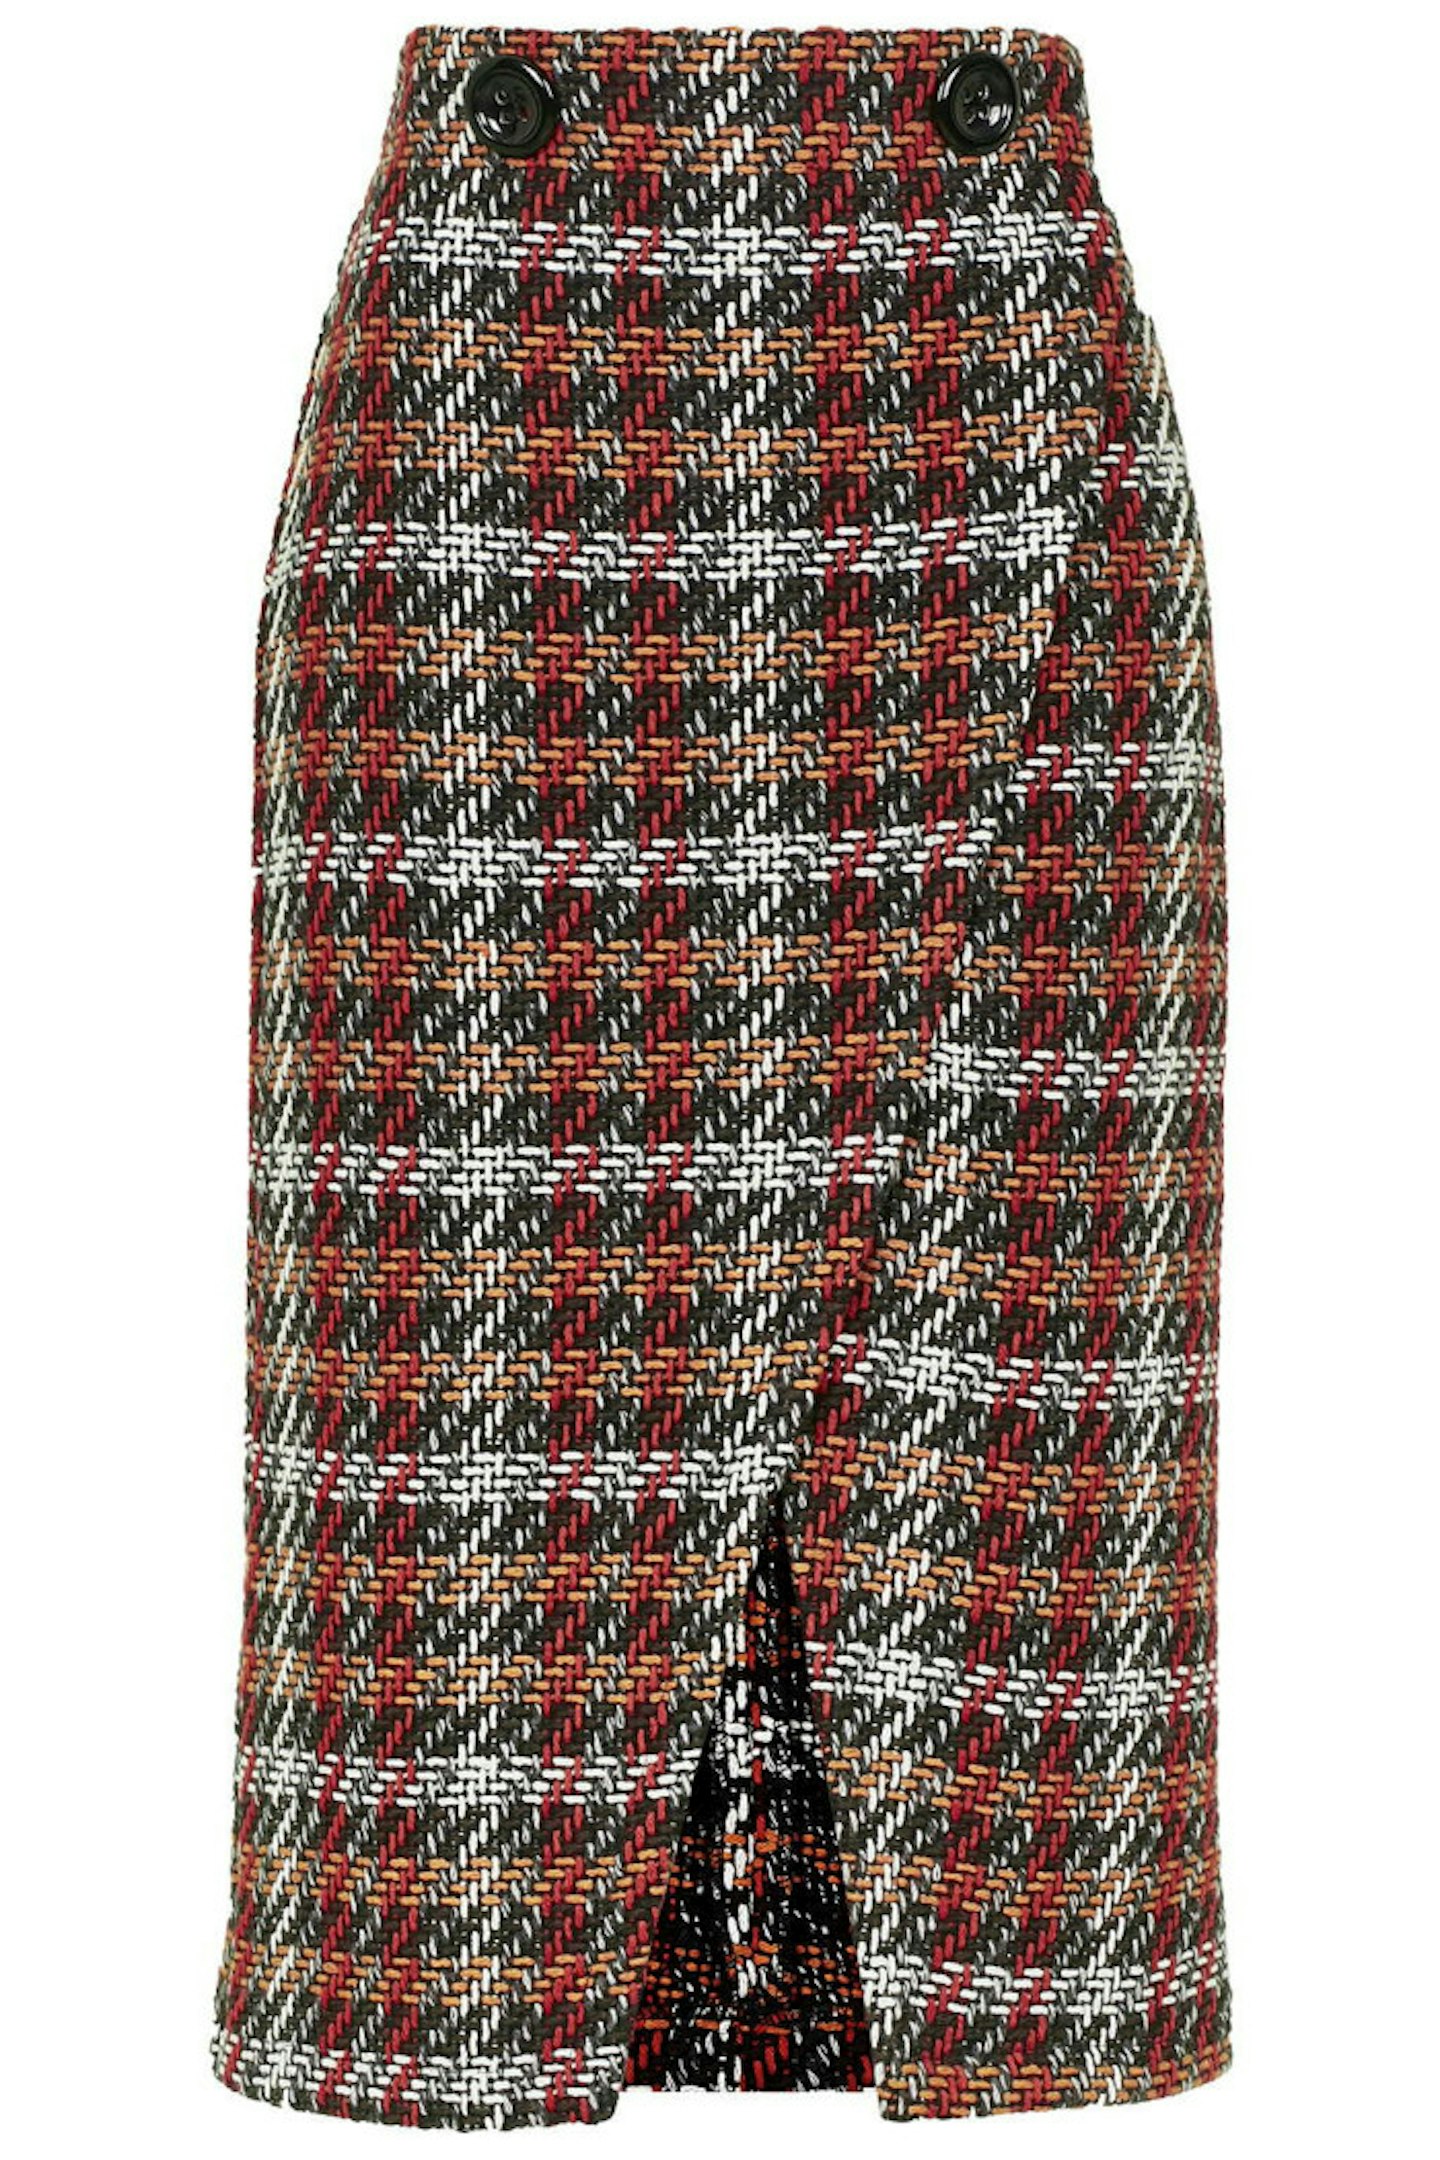 Topshop Wrap Pencil Skirt, £48.00